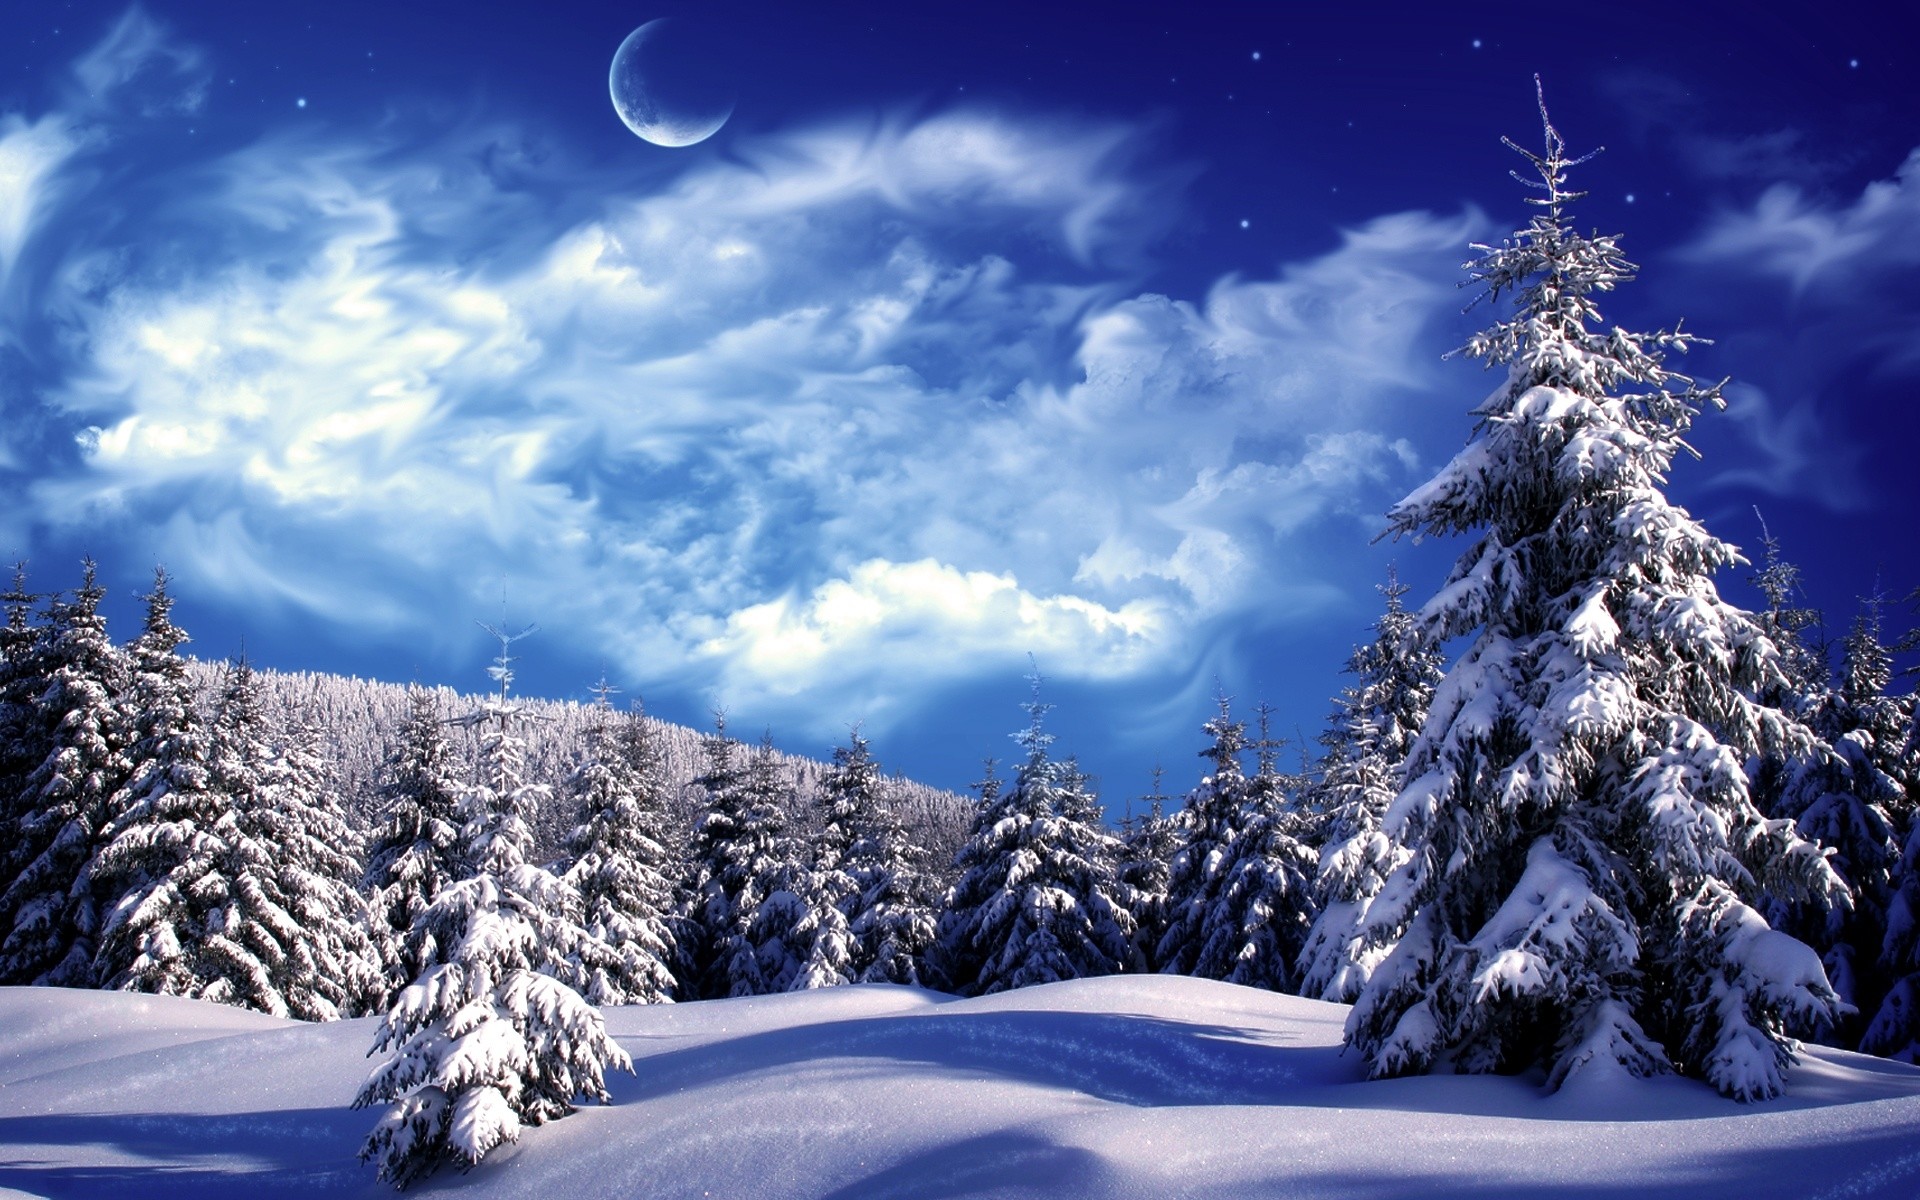 HD Wallpaper Winter Scene Image